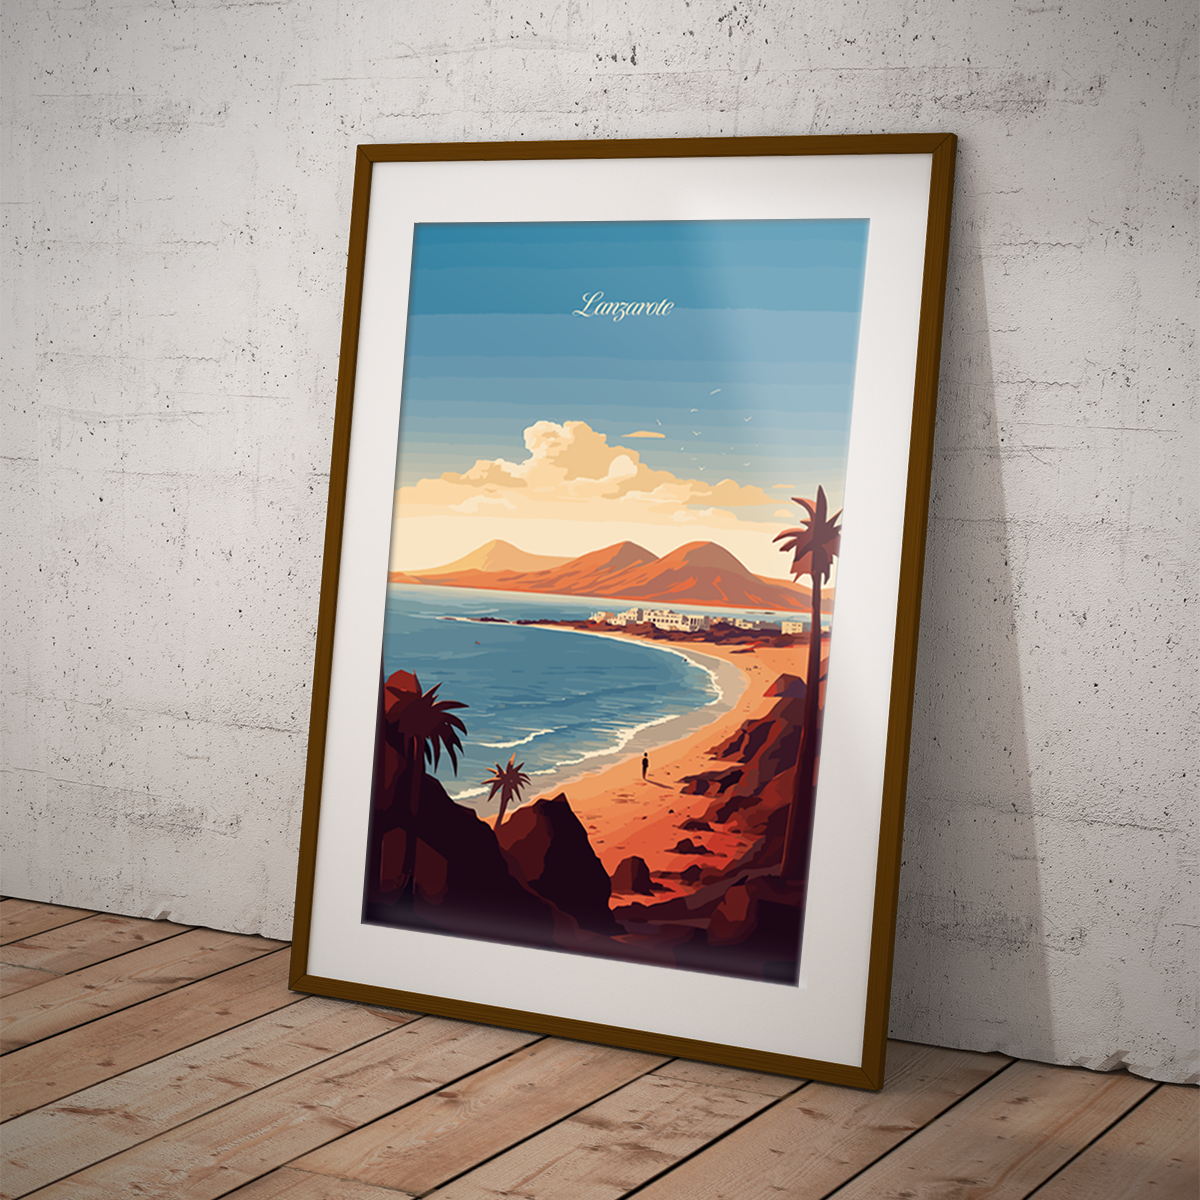 Lanzarote poster by bon voyage design